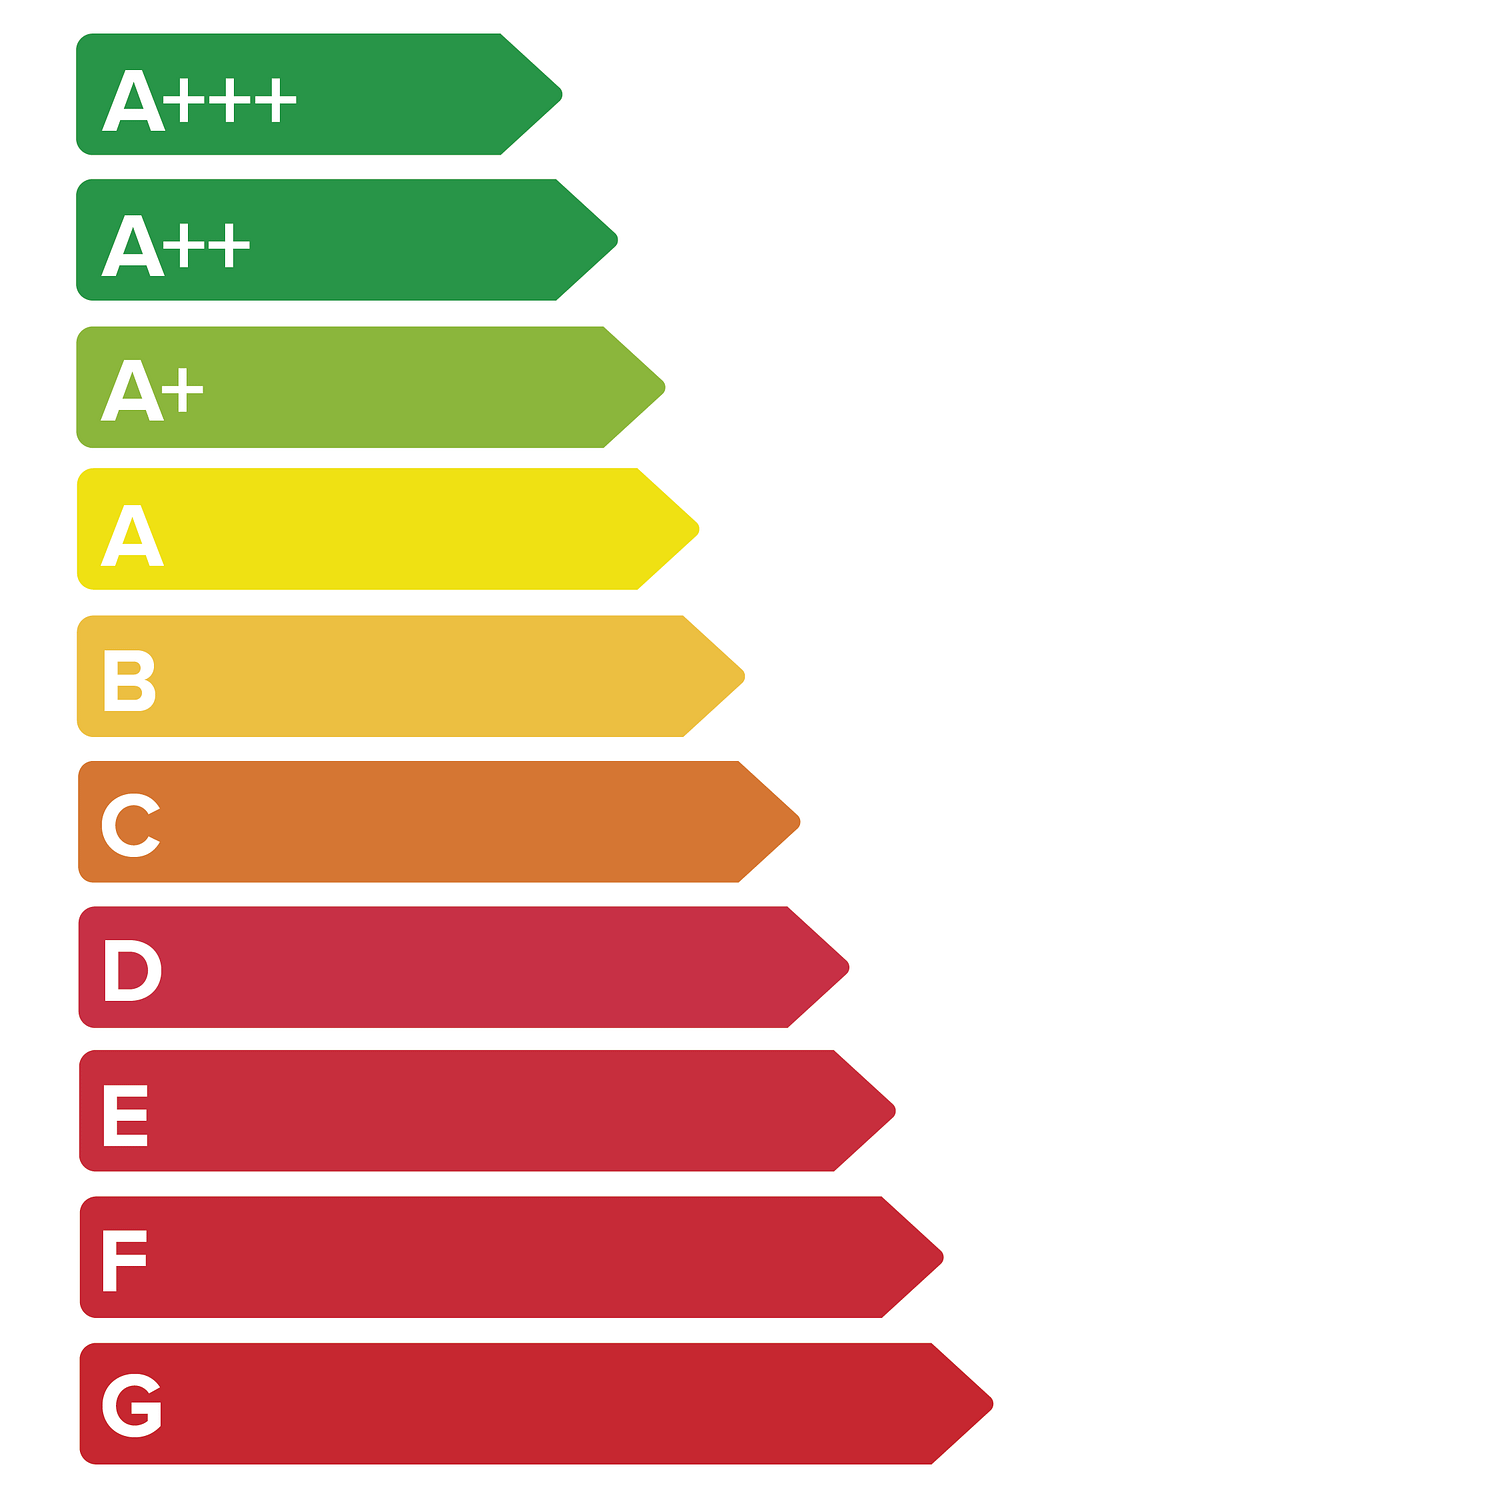 European energy inspection ratings chart